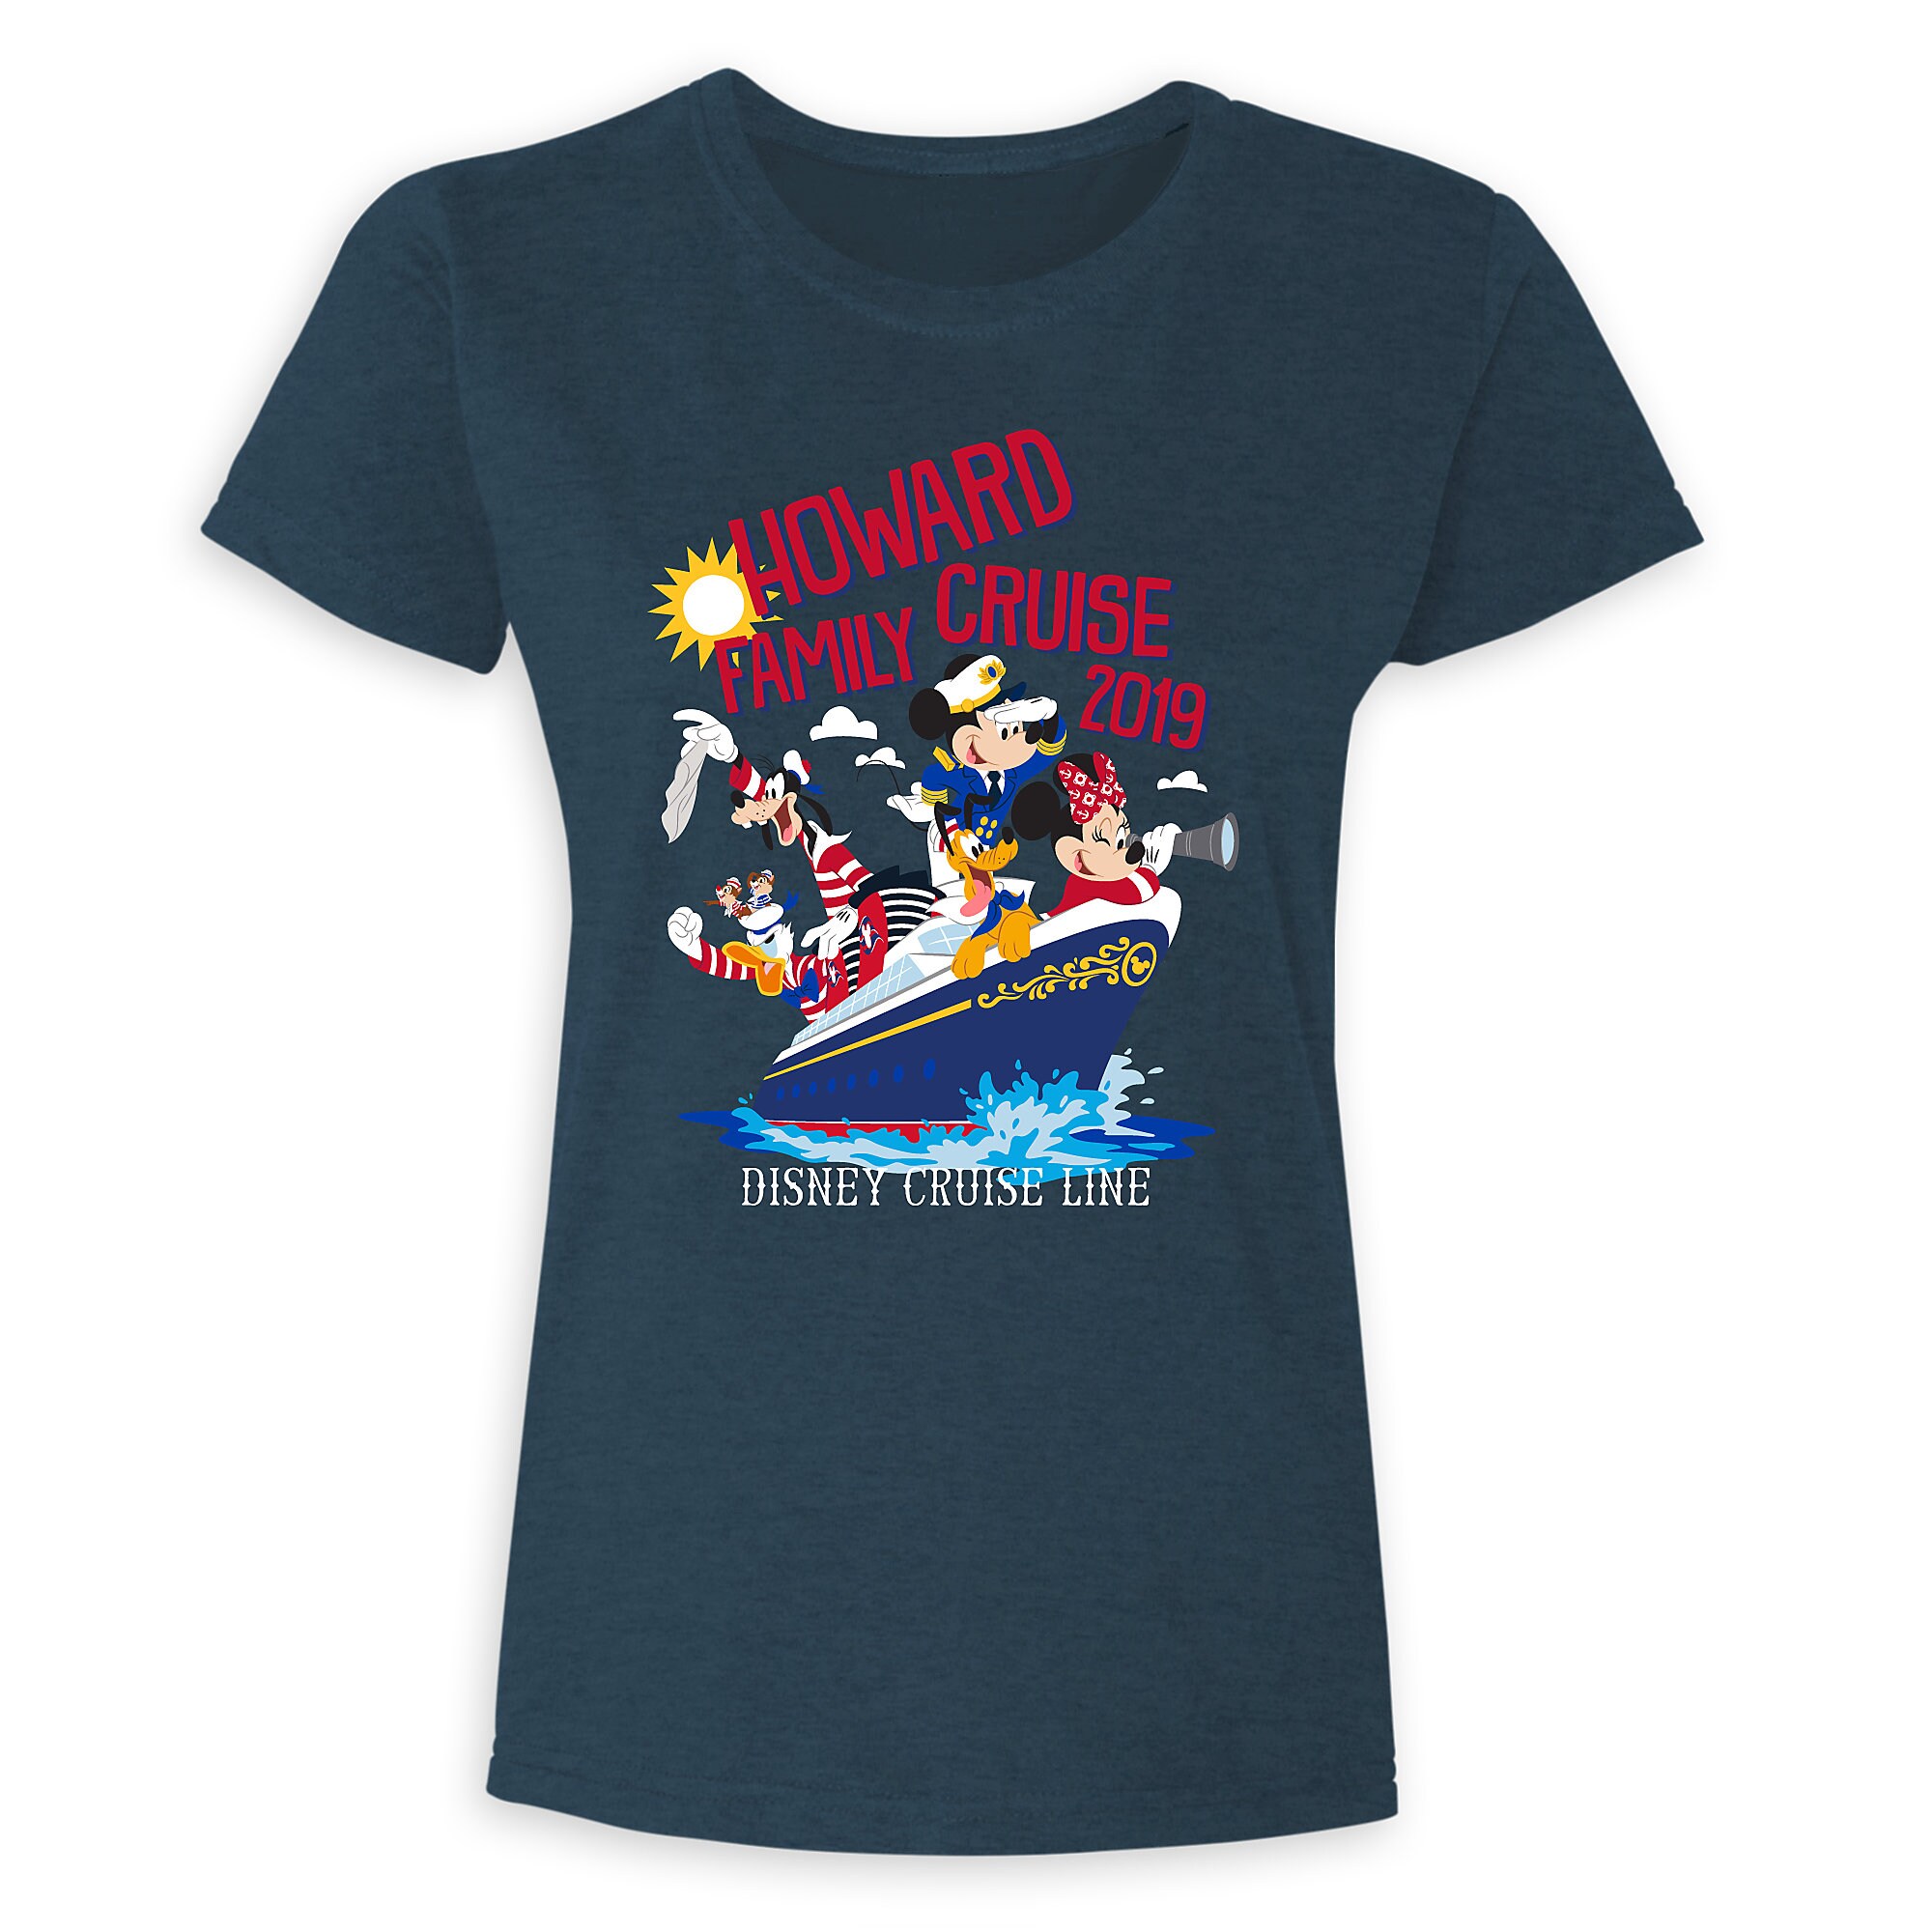 Women's Disney Cruise Line Family Cruise 2019 T-Shirt - Customized